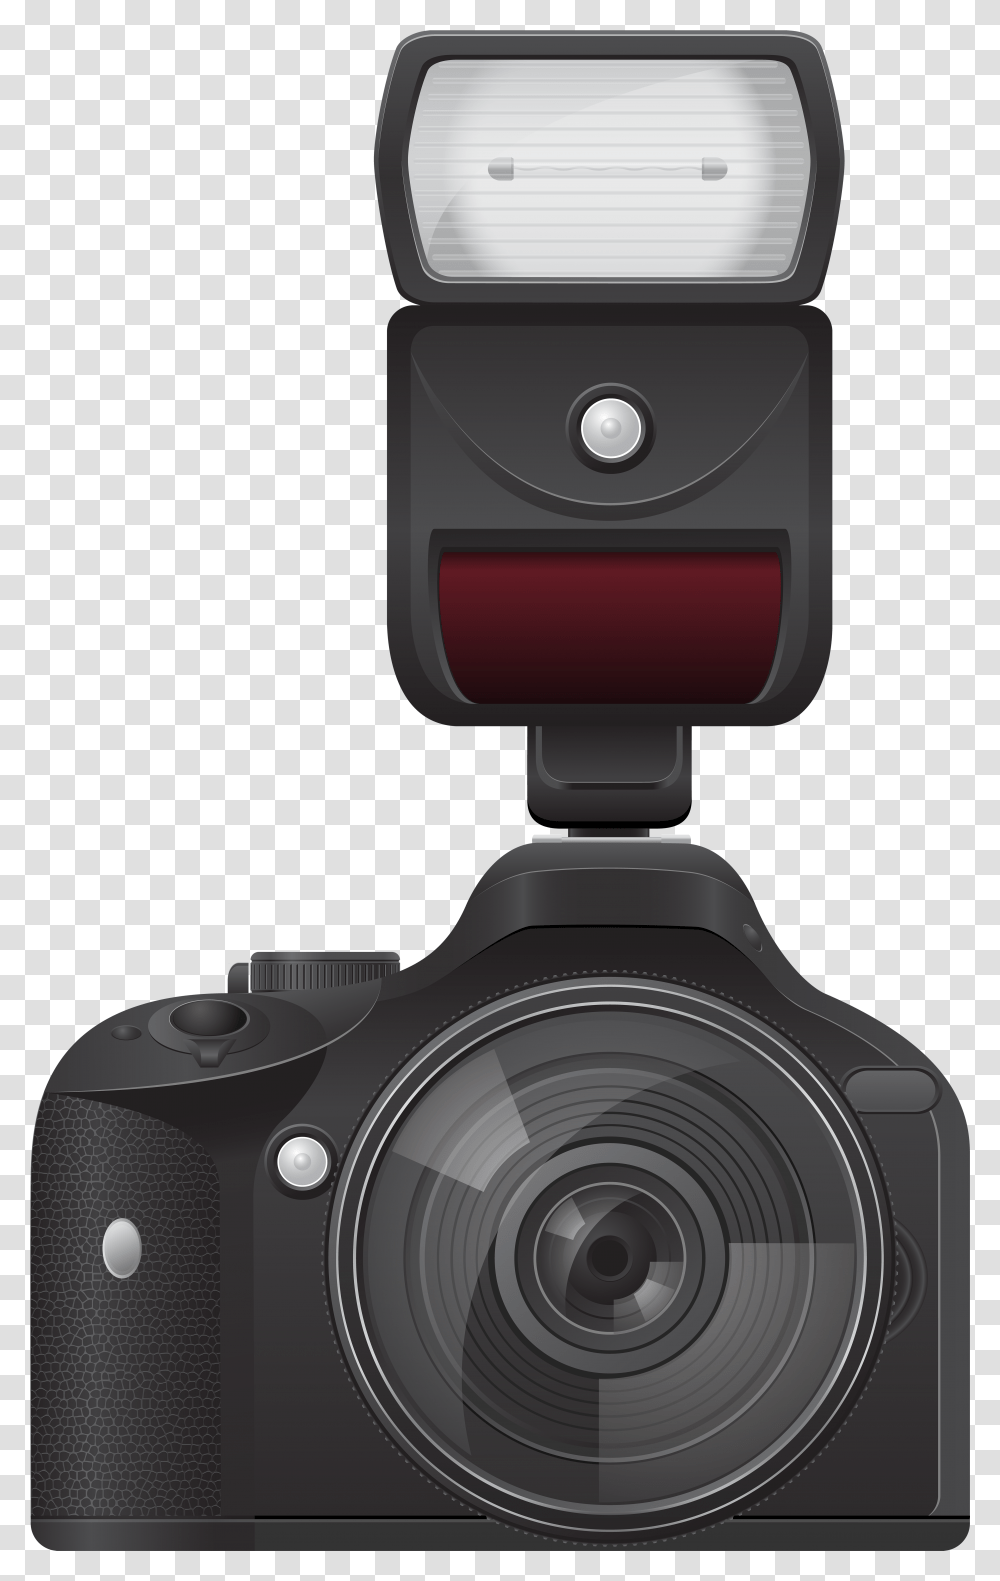 Camera With Flash Image Camera With Flash, Electronics, Digital Camera, Video Camera Transparent Png